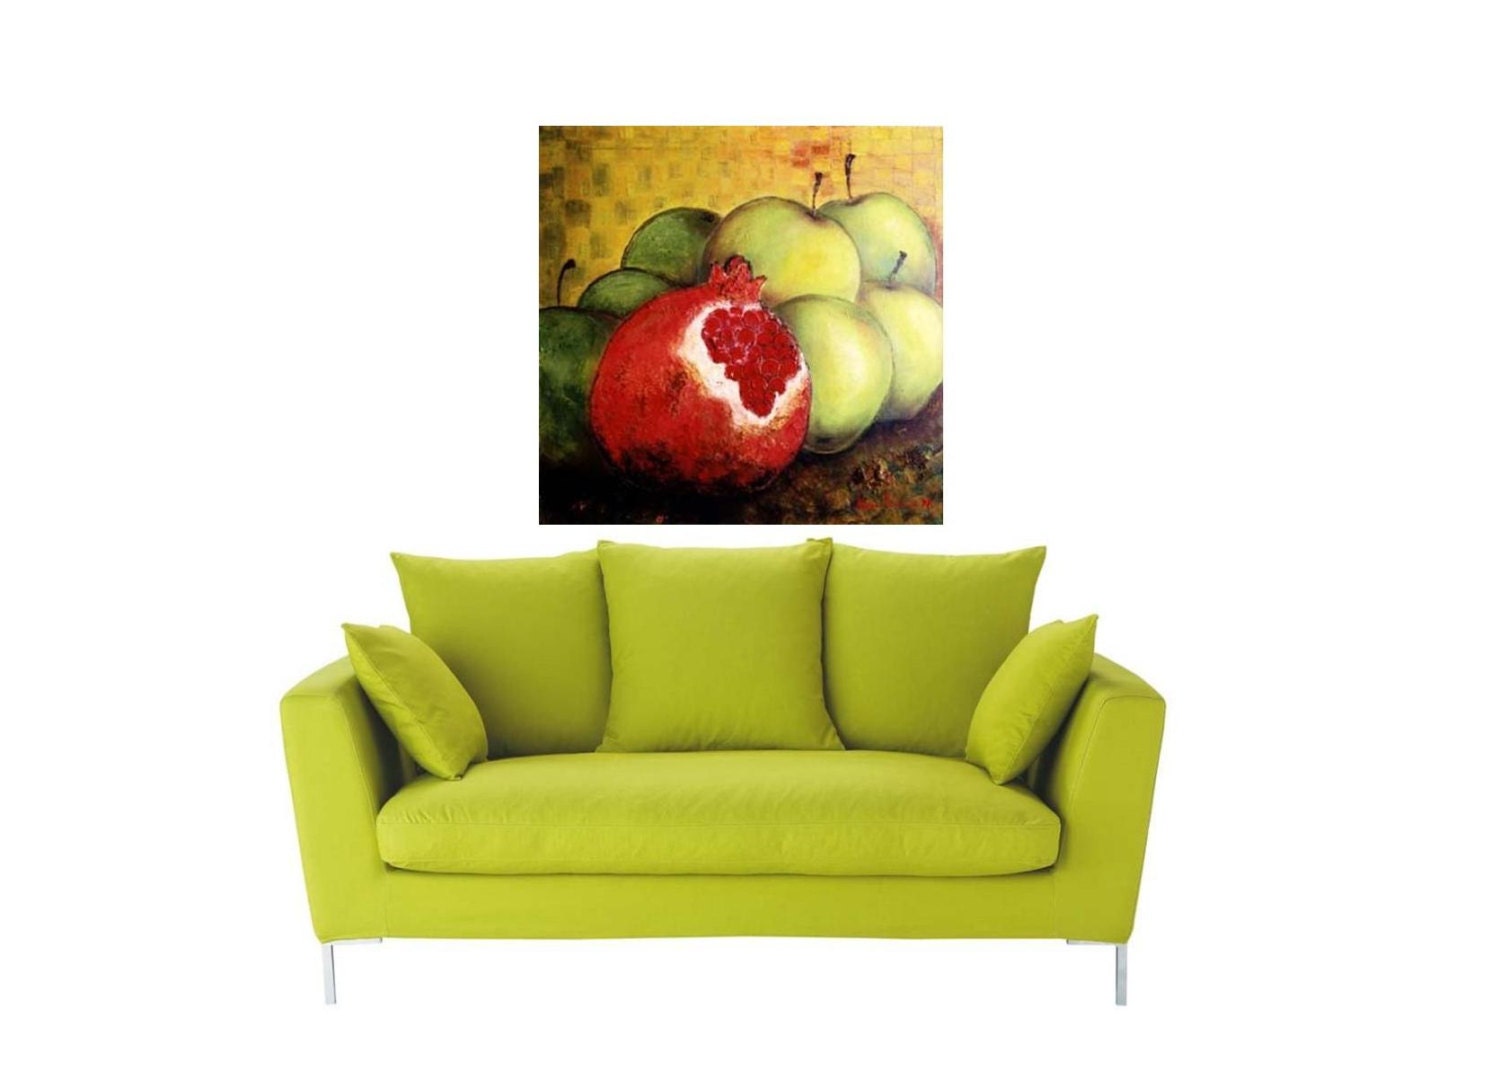 Green Apples large Original oil on linen painting 90x90cm